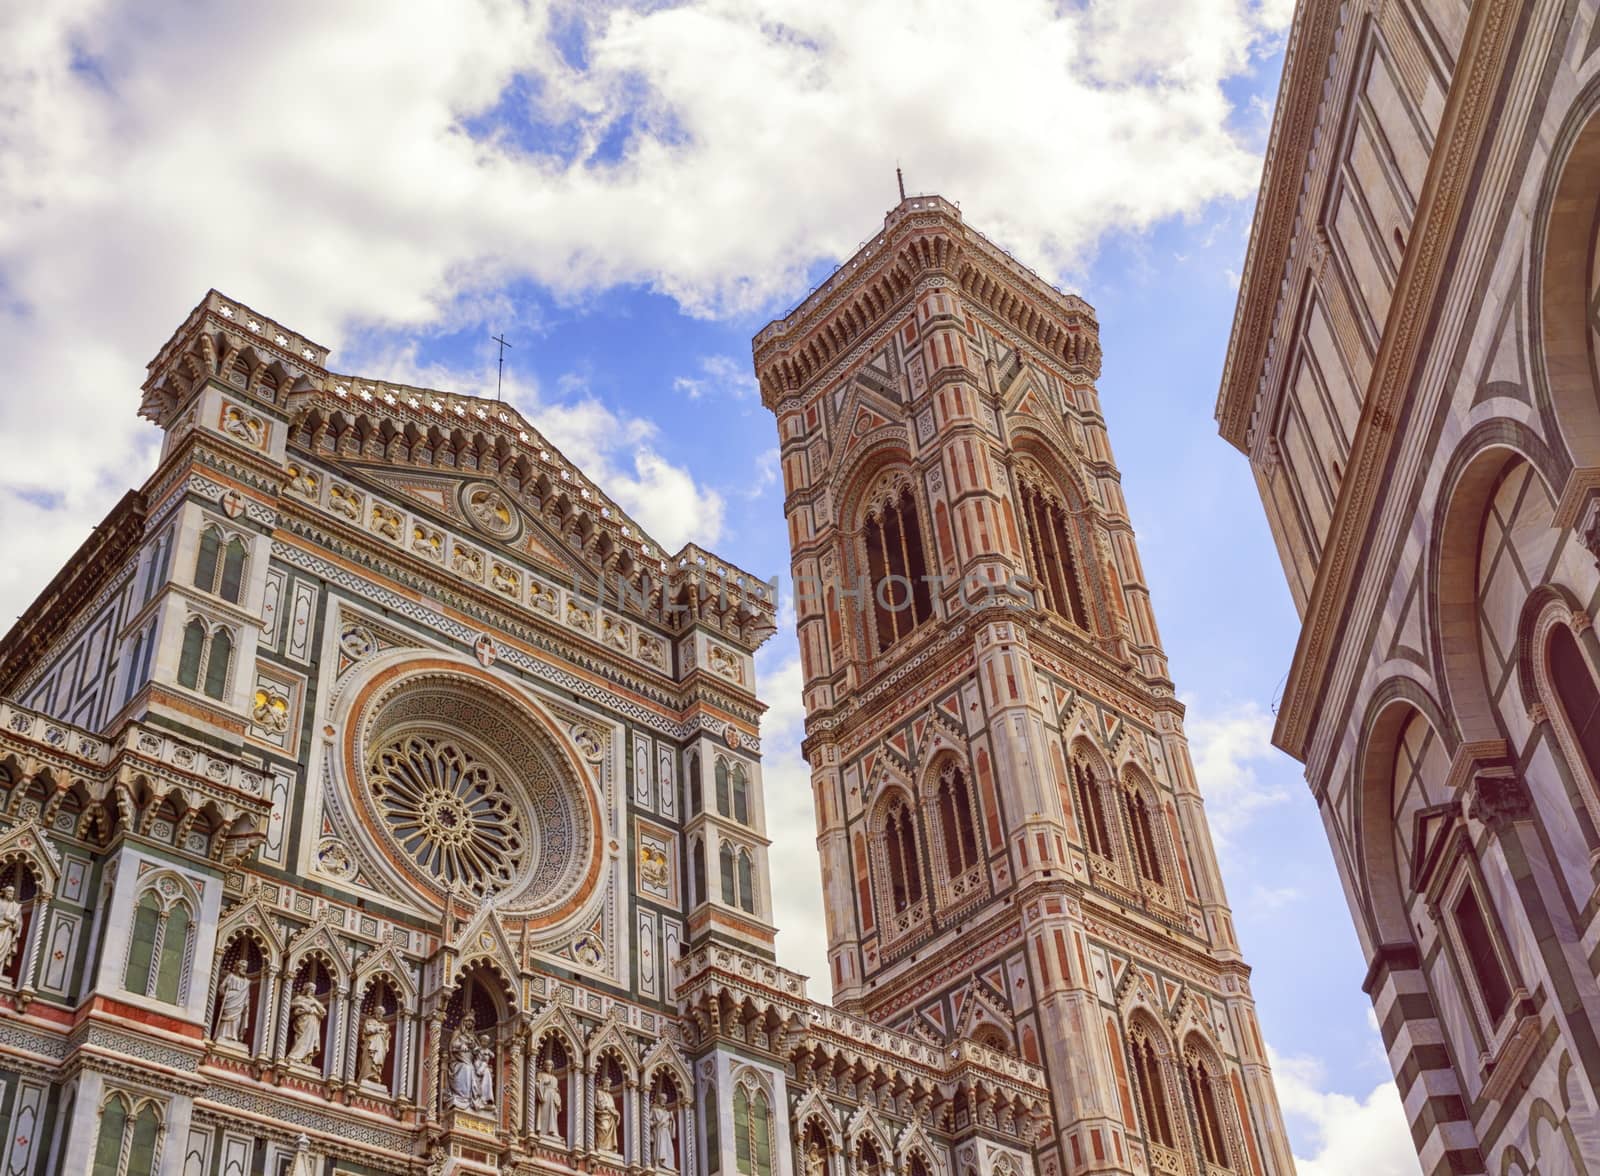 Cathedral Santa Maria del Fiore, Duomo, in Florence, Tuscany, Italy by Elenaphotos21